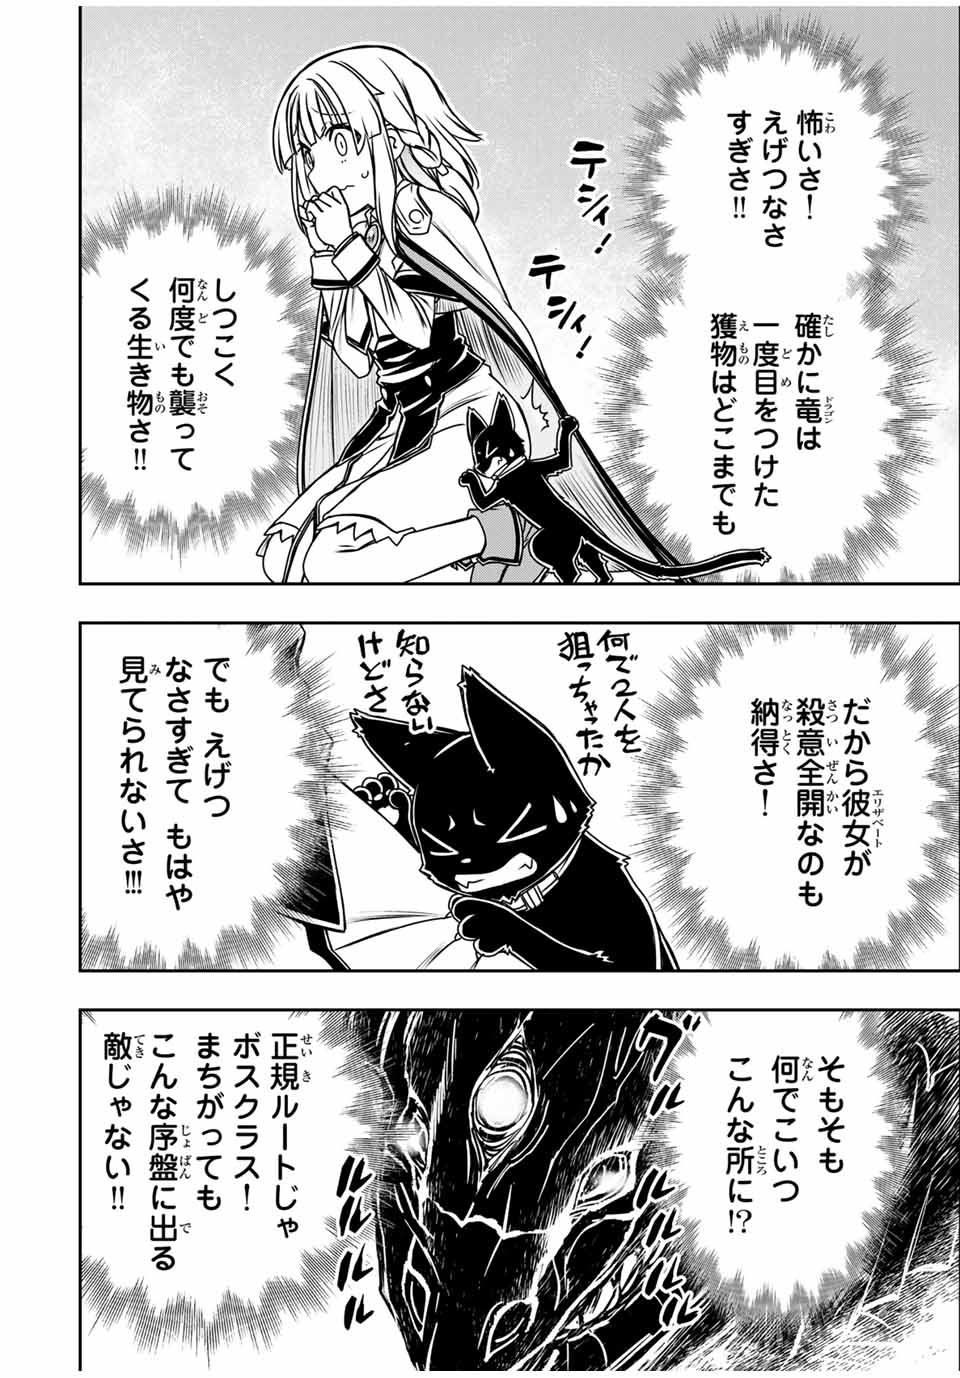 Nengan no Akuyaku Reijou (Last Boss) no Karada wo Teniiretazo!  - Chapter 22 - Page 16